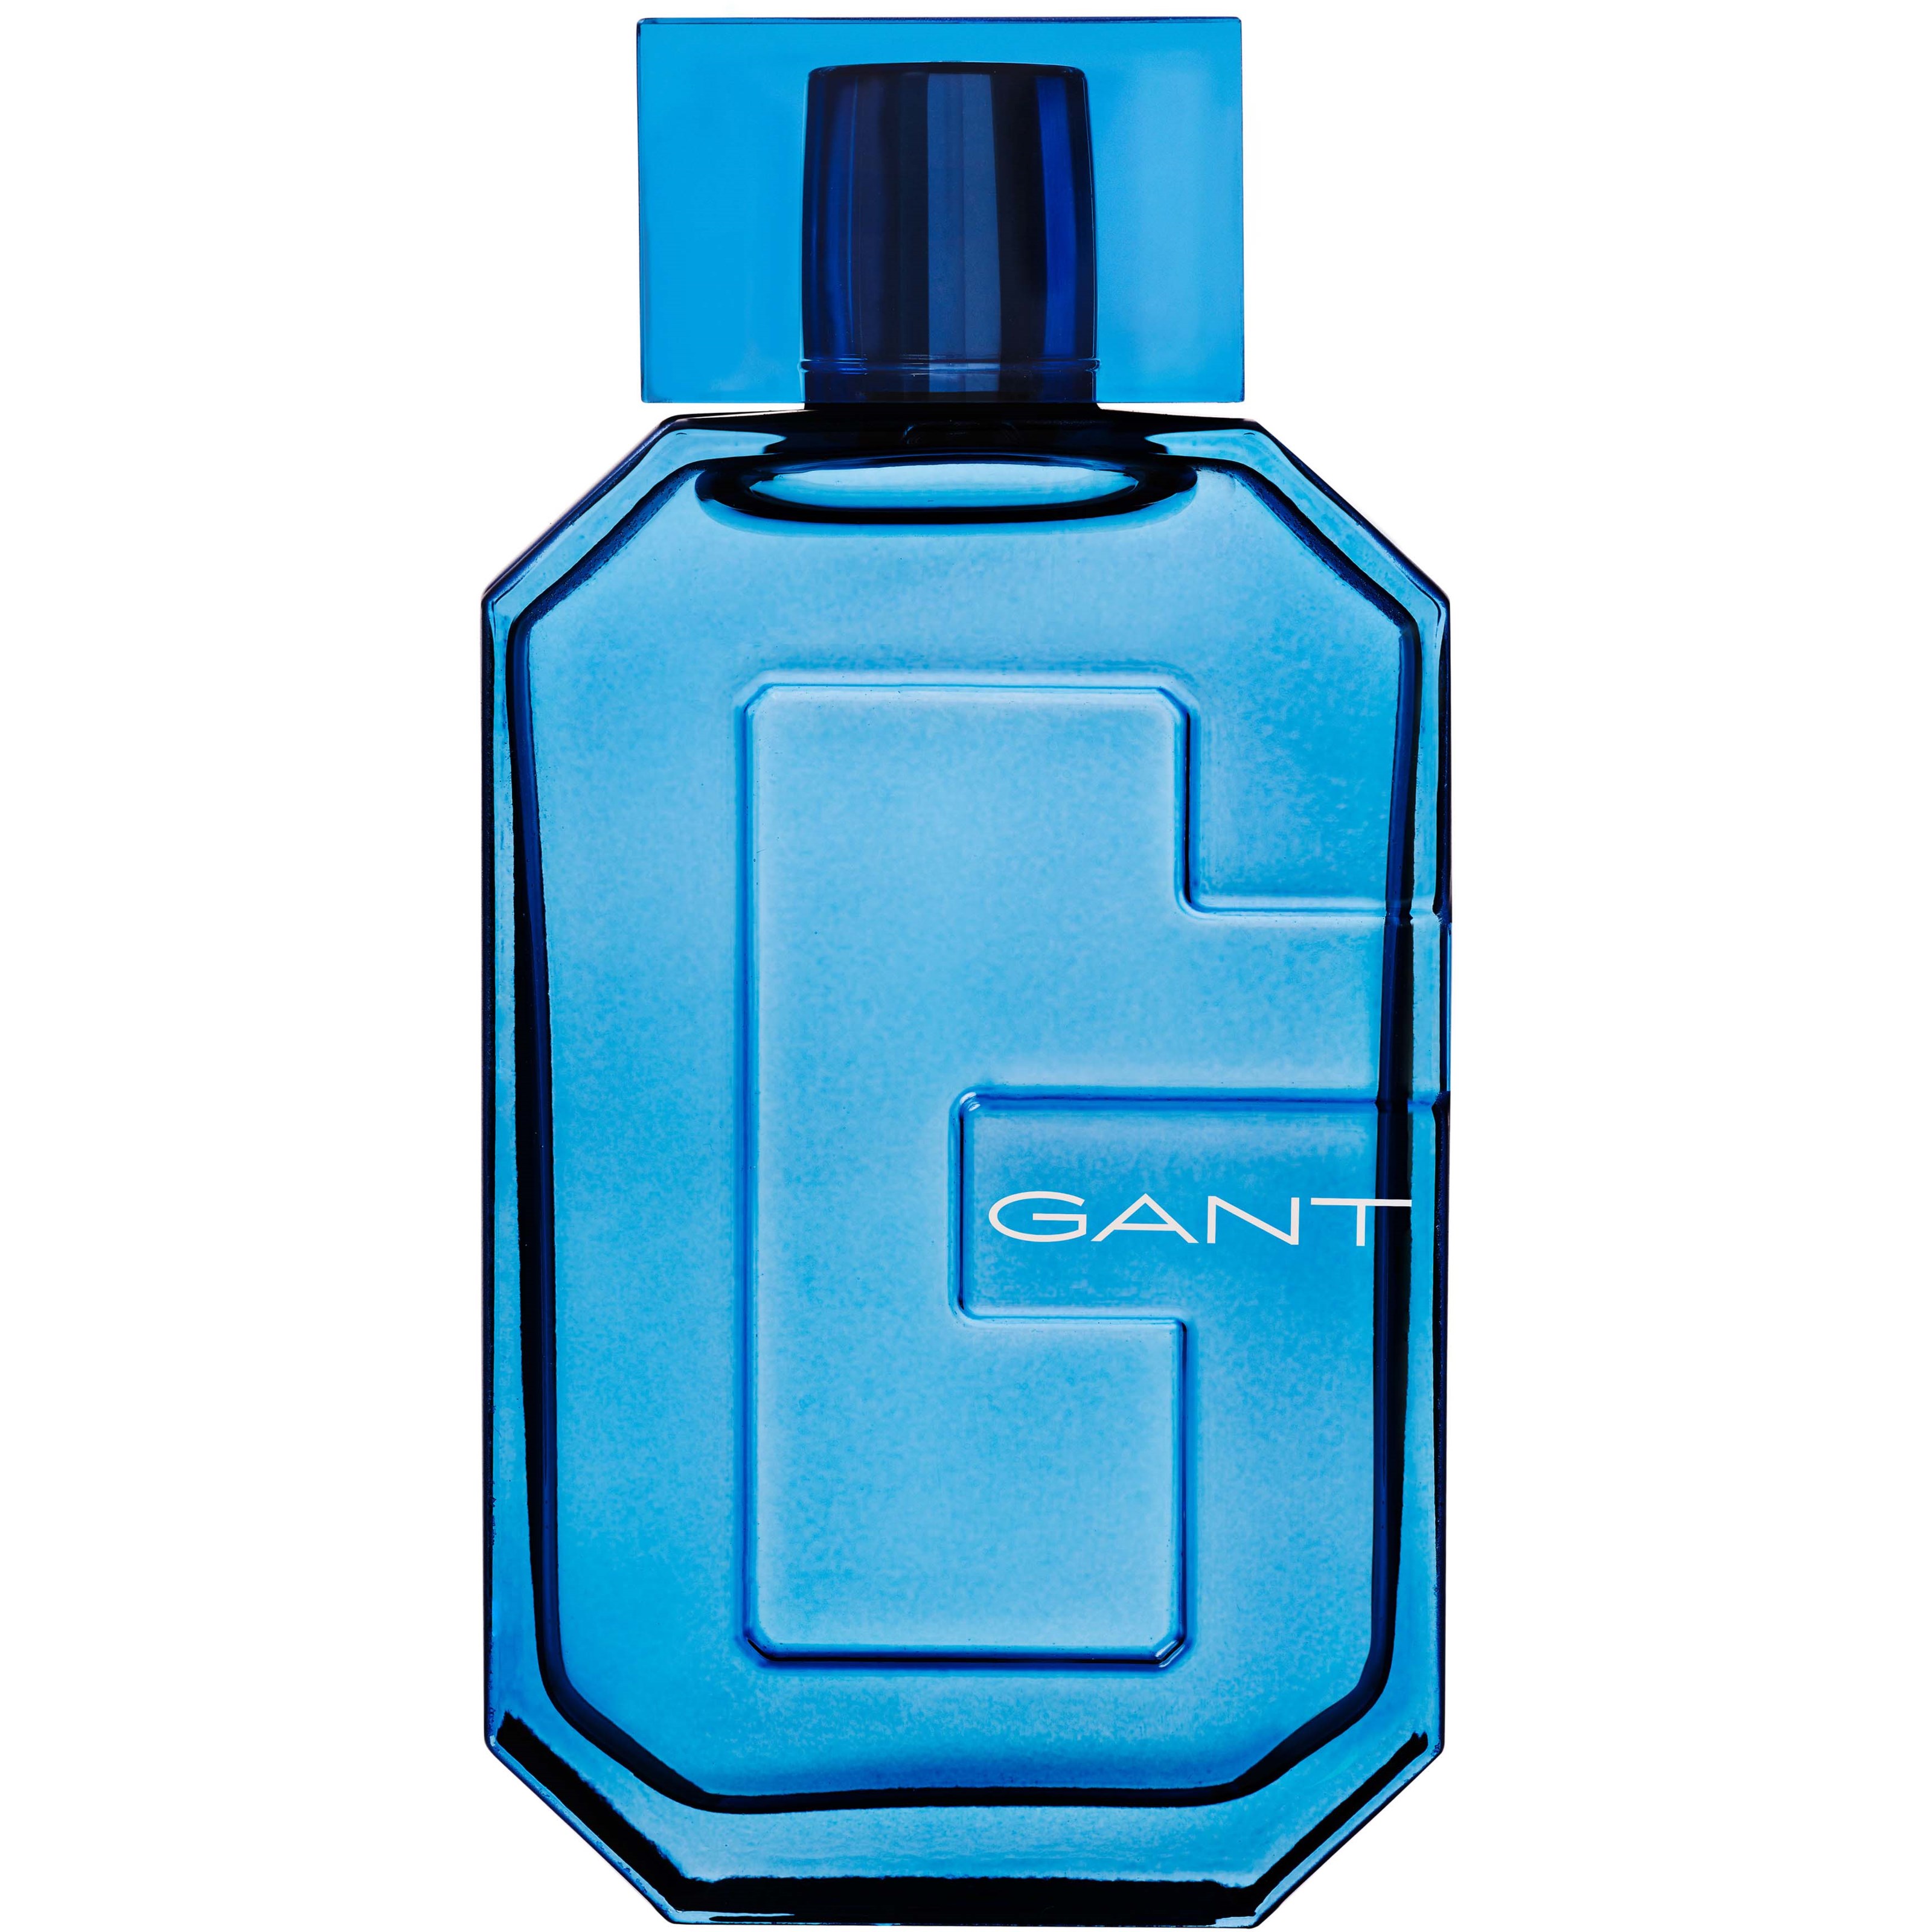 Фото - Чоловічі парфуми Gant Eau de Toilette 100 ml 